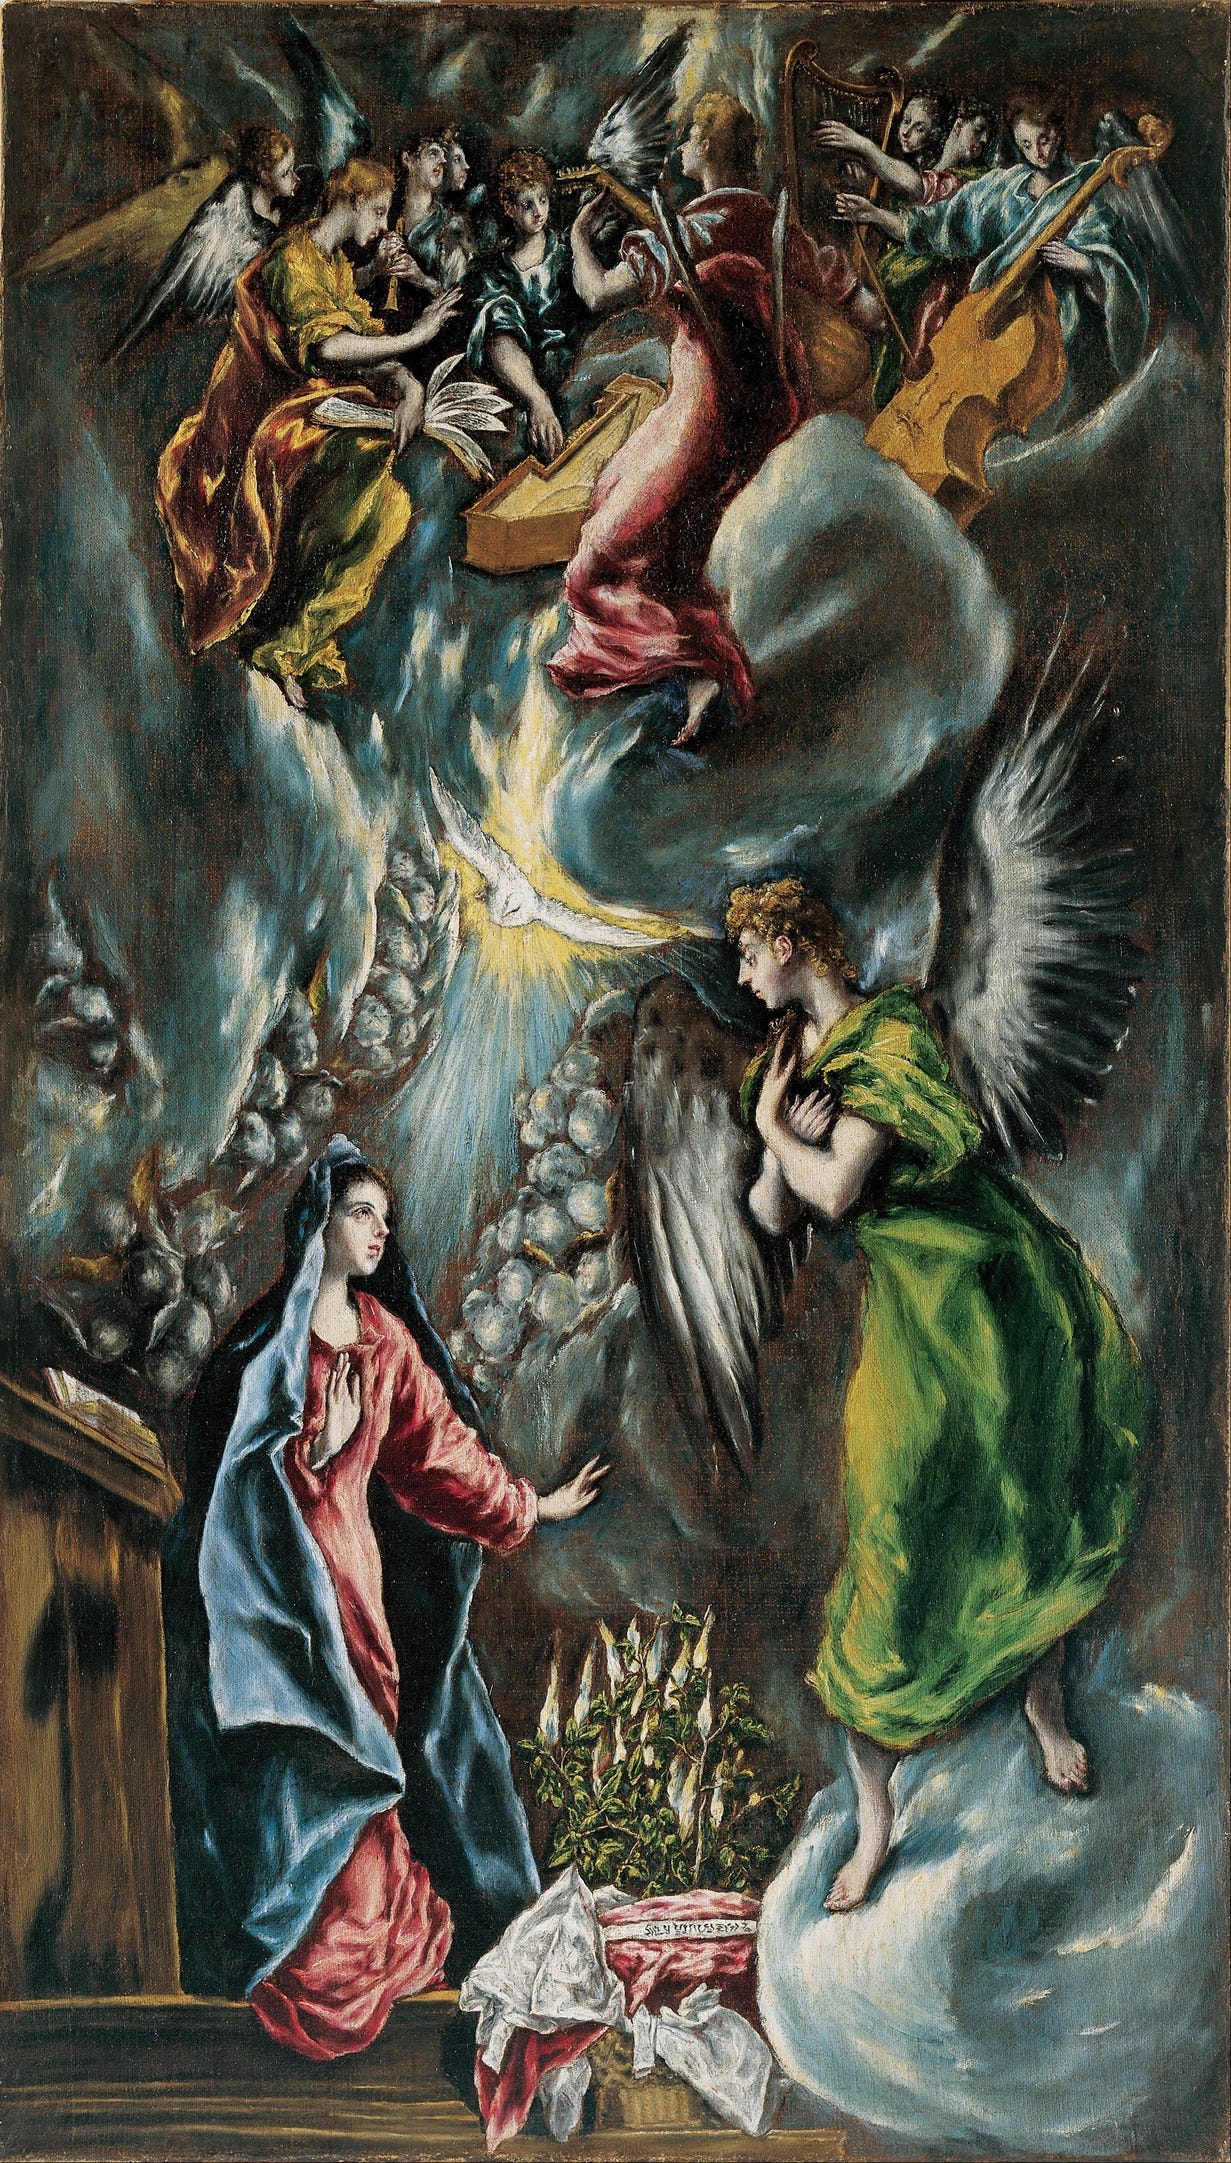 The Annunciation (Ca. 1596-1600)